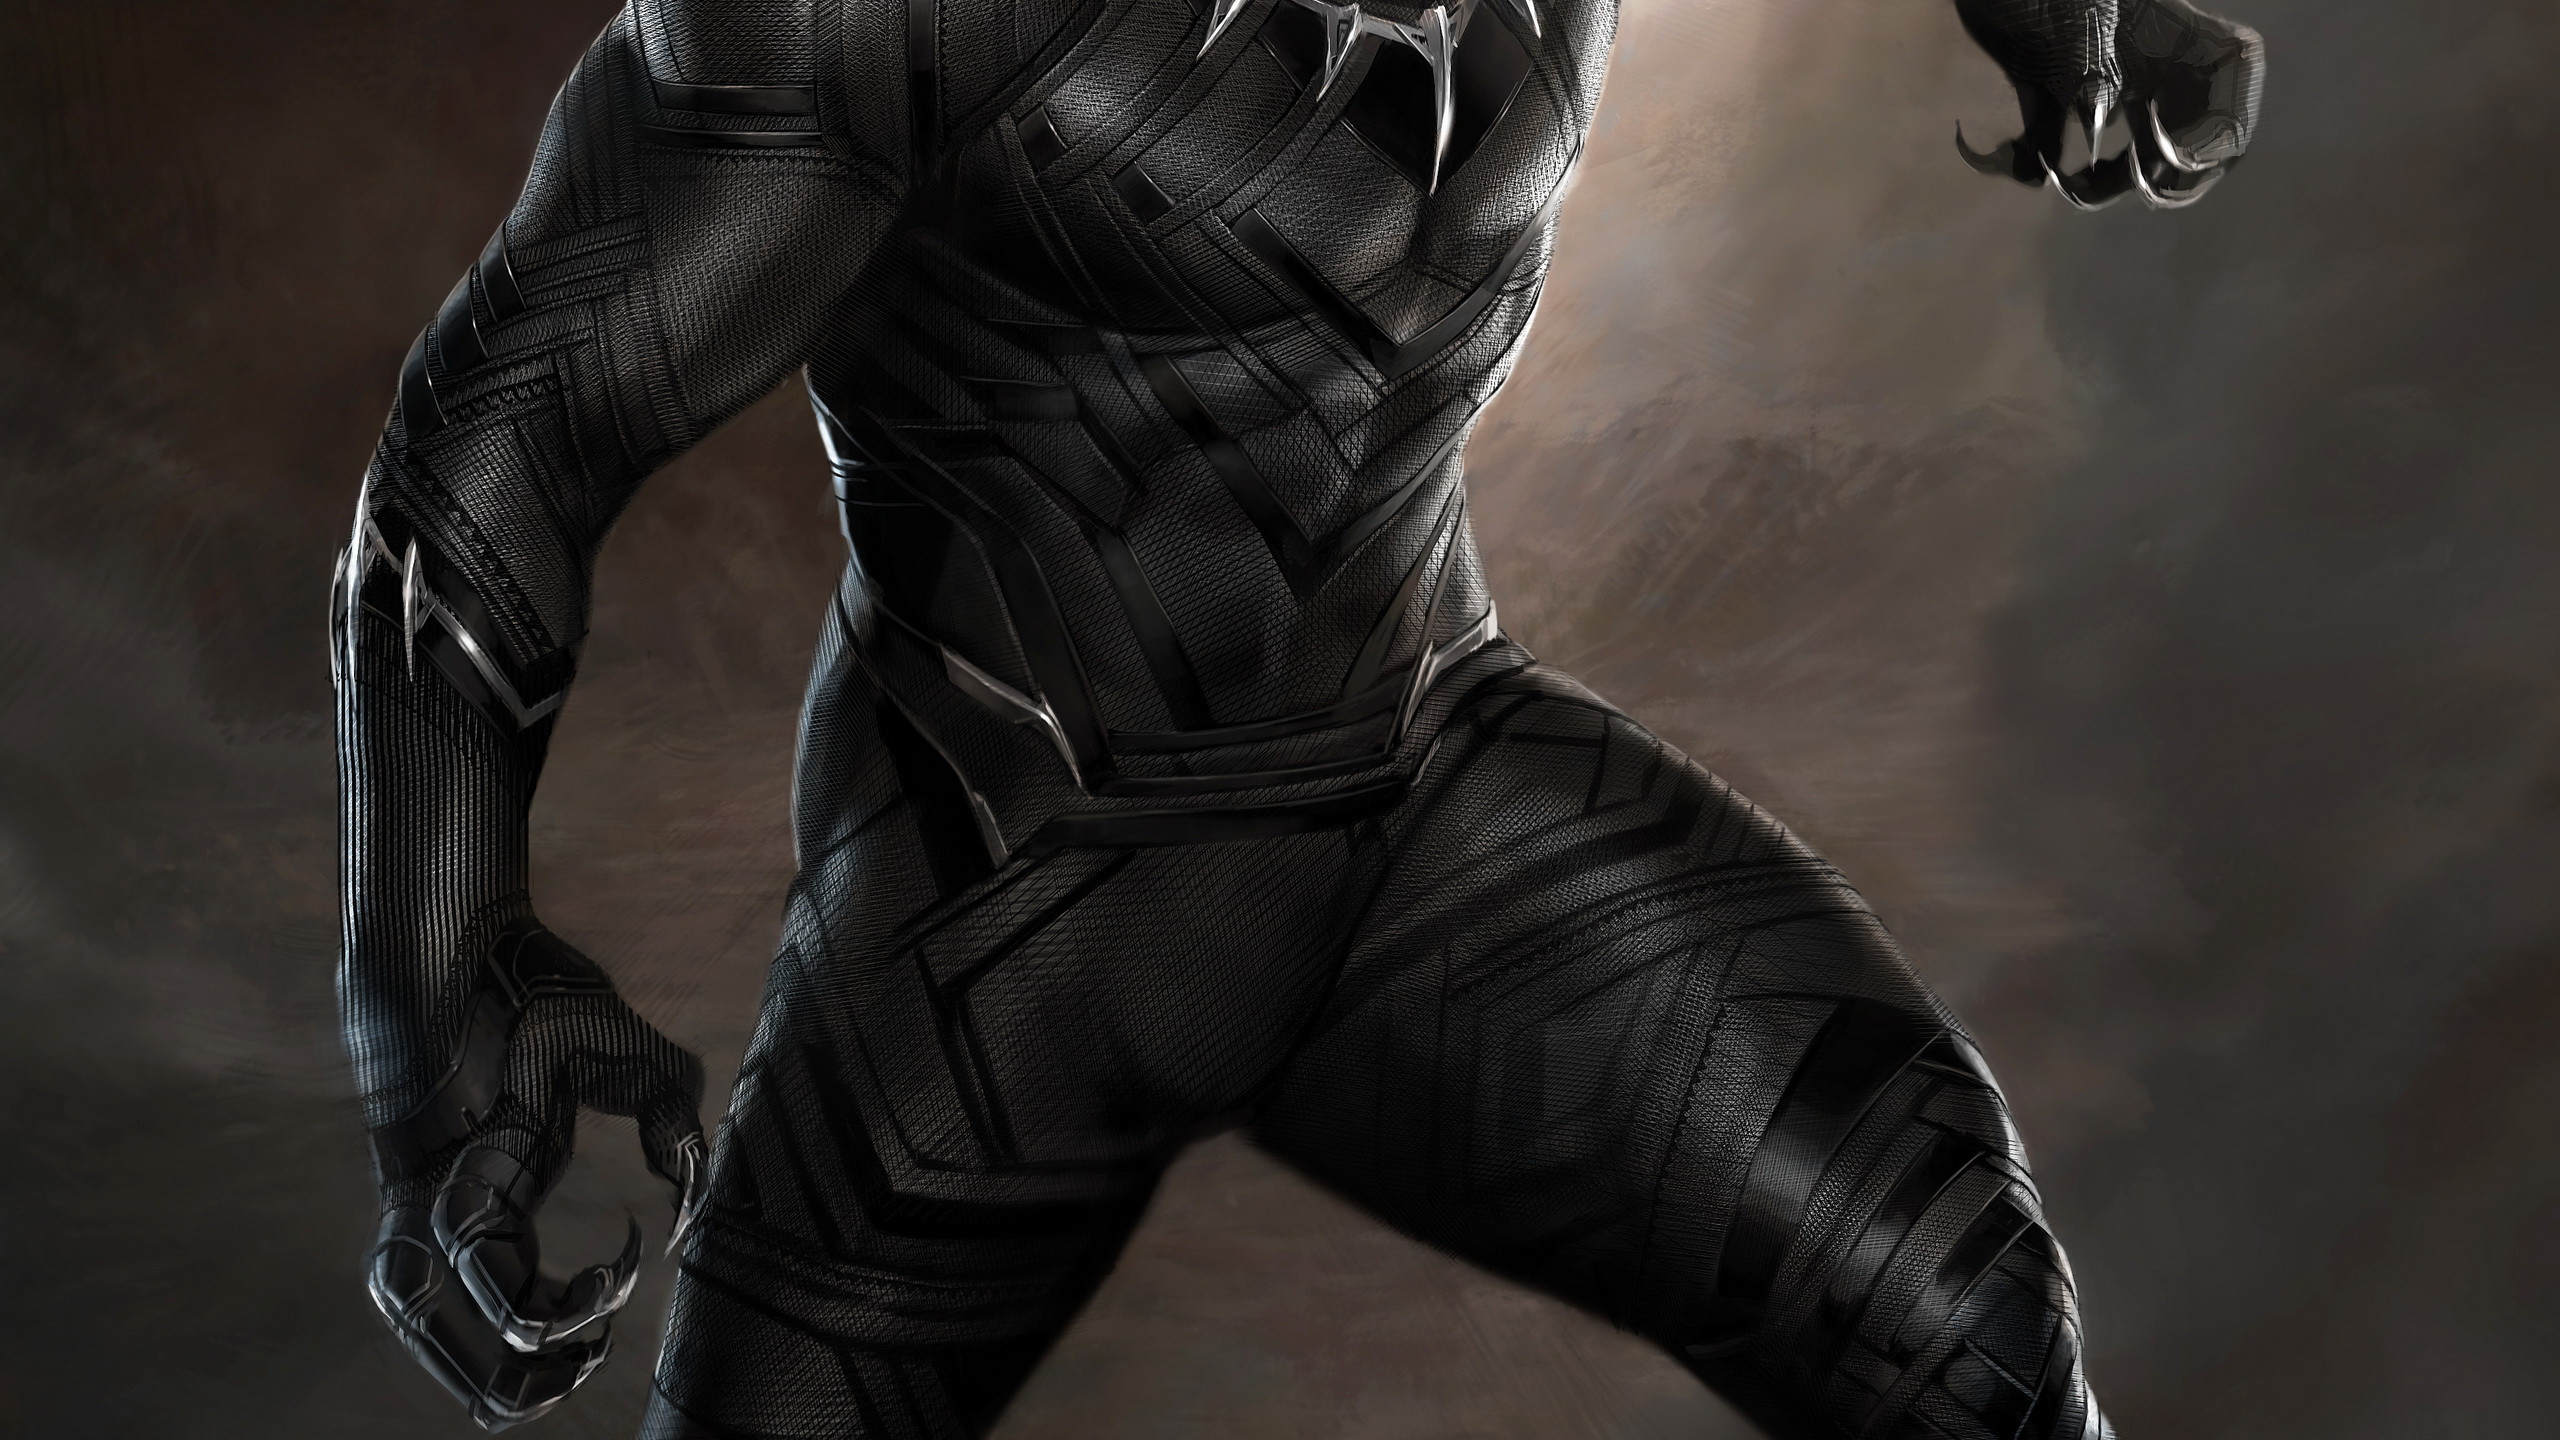 black panther marvel hd wallpaper,fictional character,batman,muscle,superhero